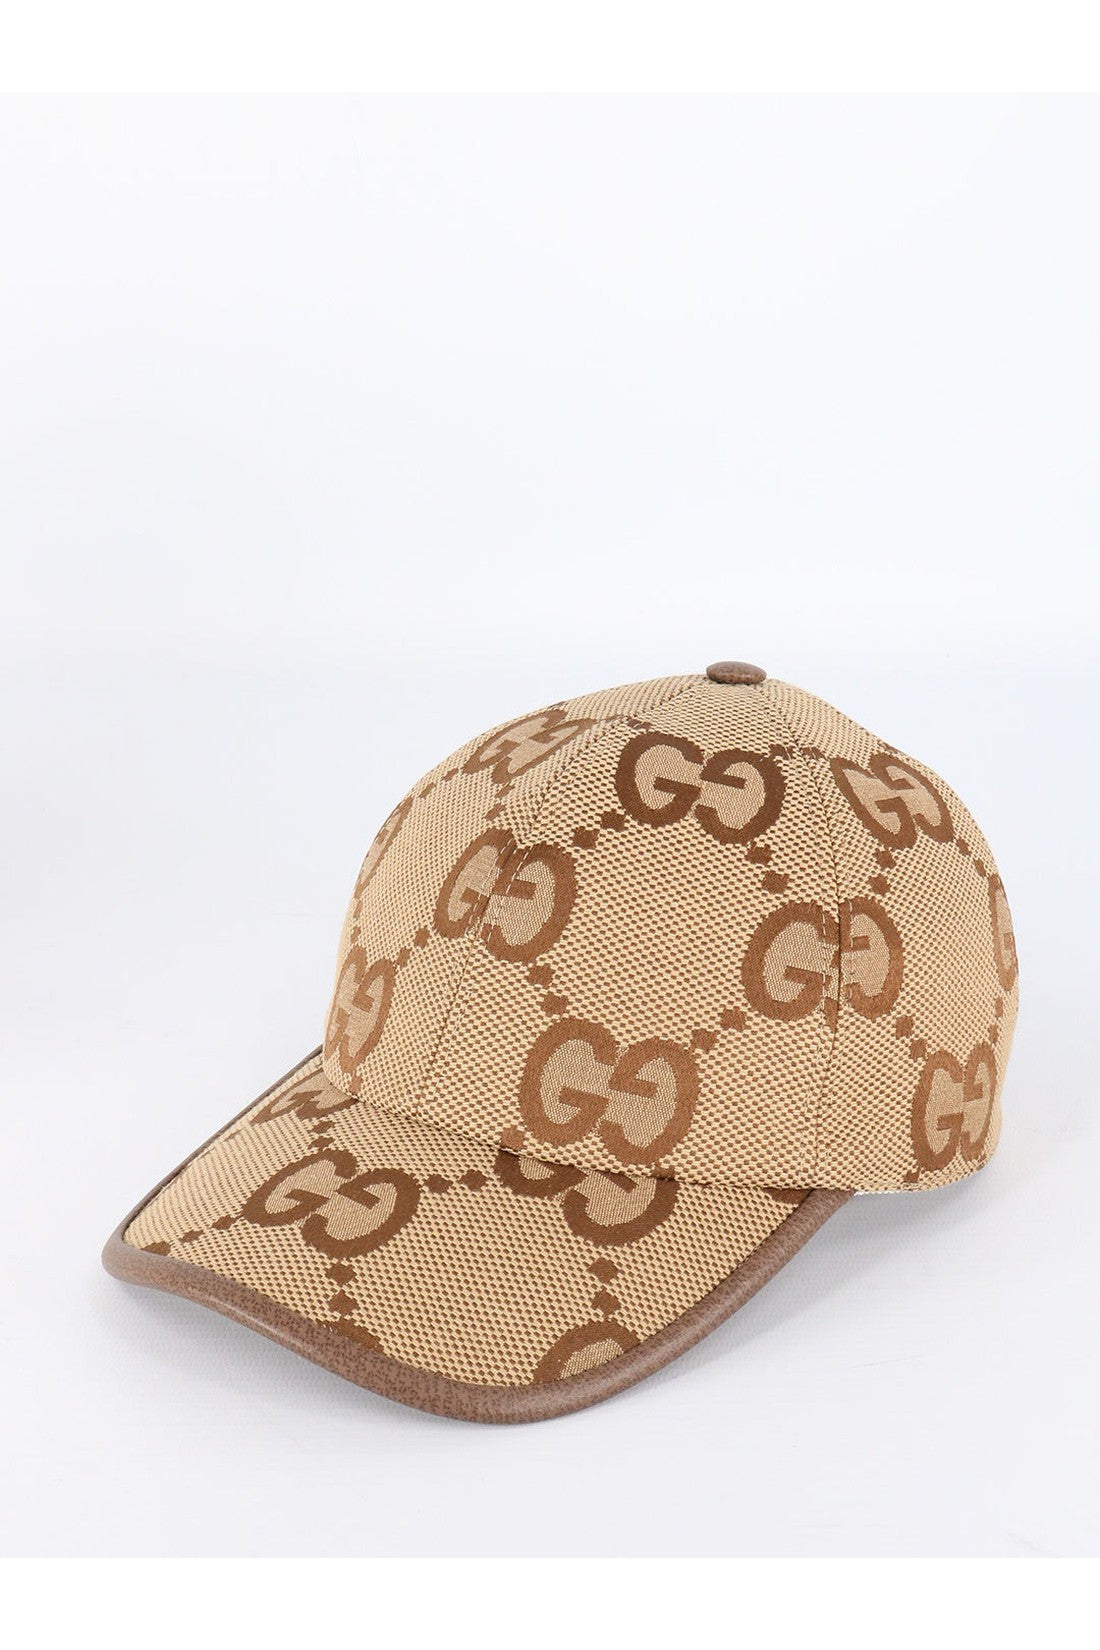 Jumbo GG canvas hat